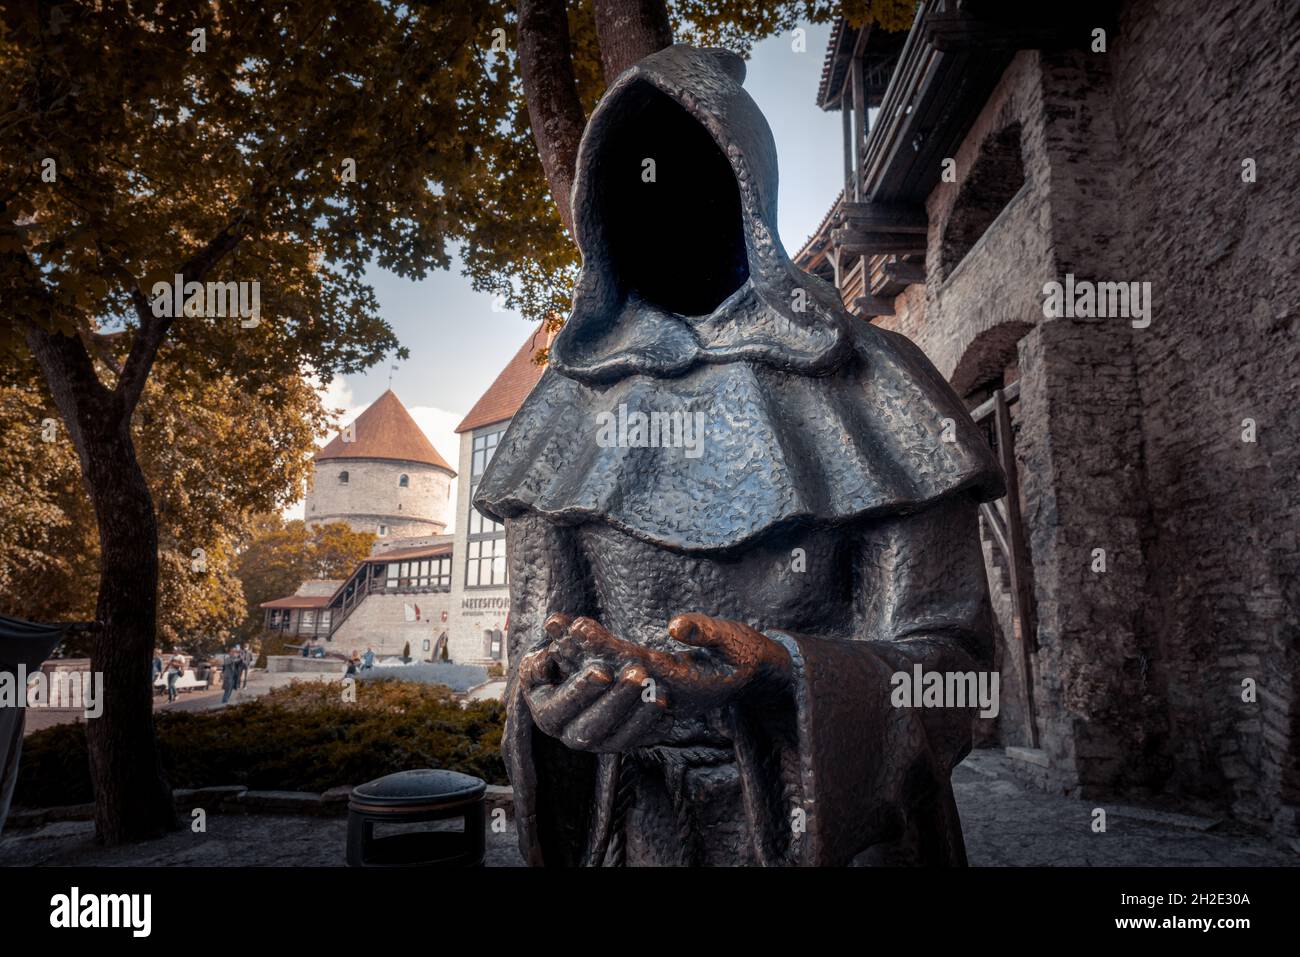 Tallinn, Estonia - Jul 08, 2019: Faceless Monks Sculpture named Three at Danish Kings Garden - Ambrosius the Waiting Monk - art by Aivar Simsom and Pa Stock Photo